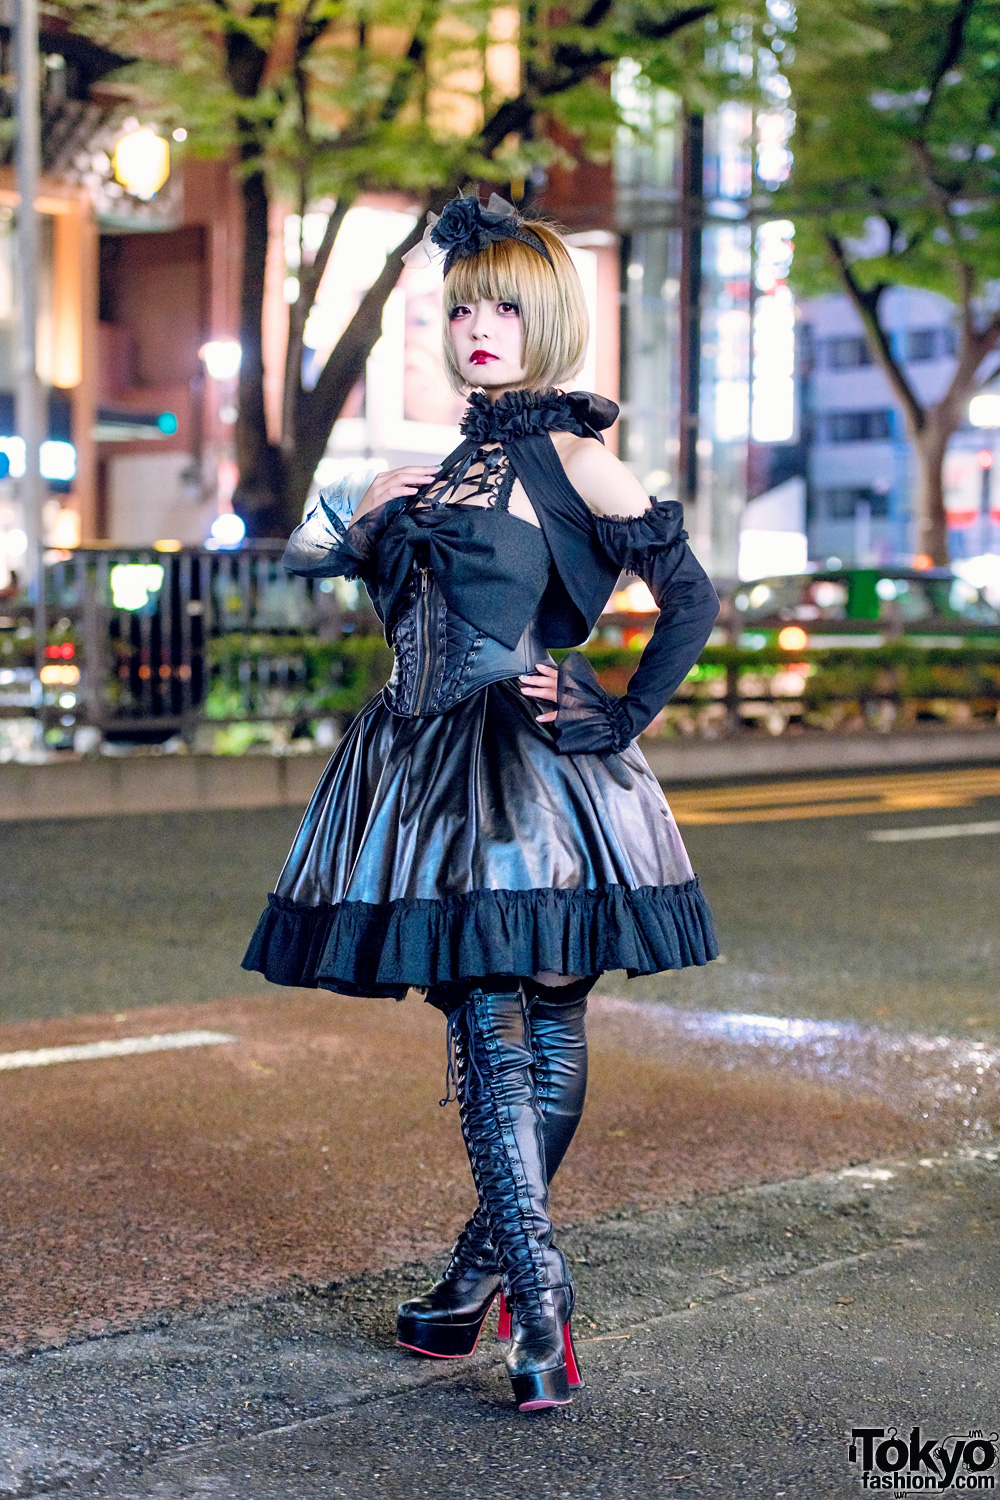 Tokyo Fashion - Japanese Idol in Harajuku Gothic Lolita Style w